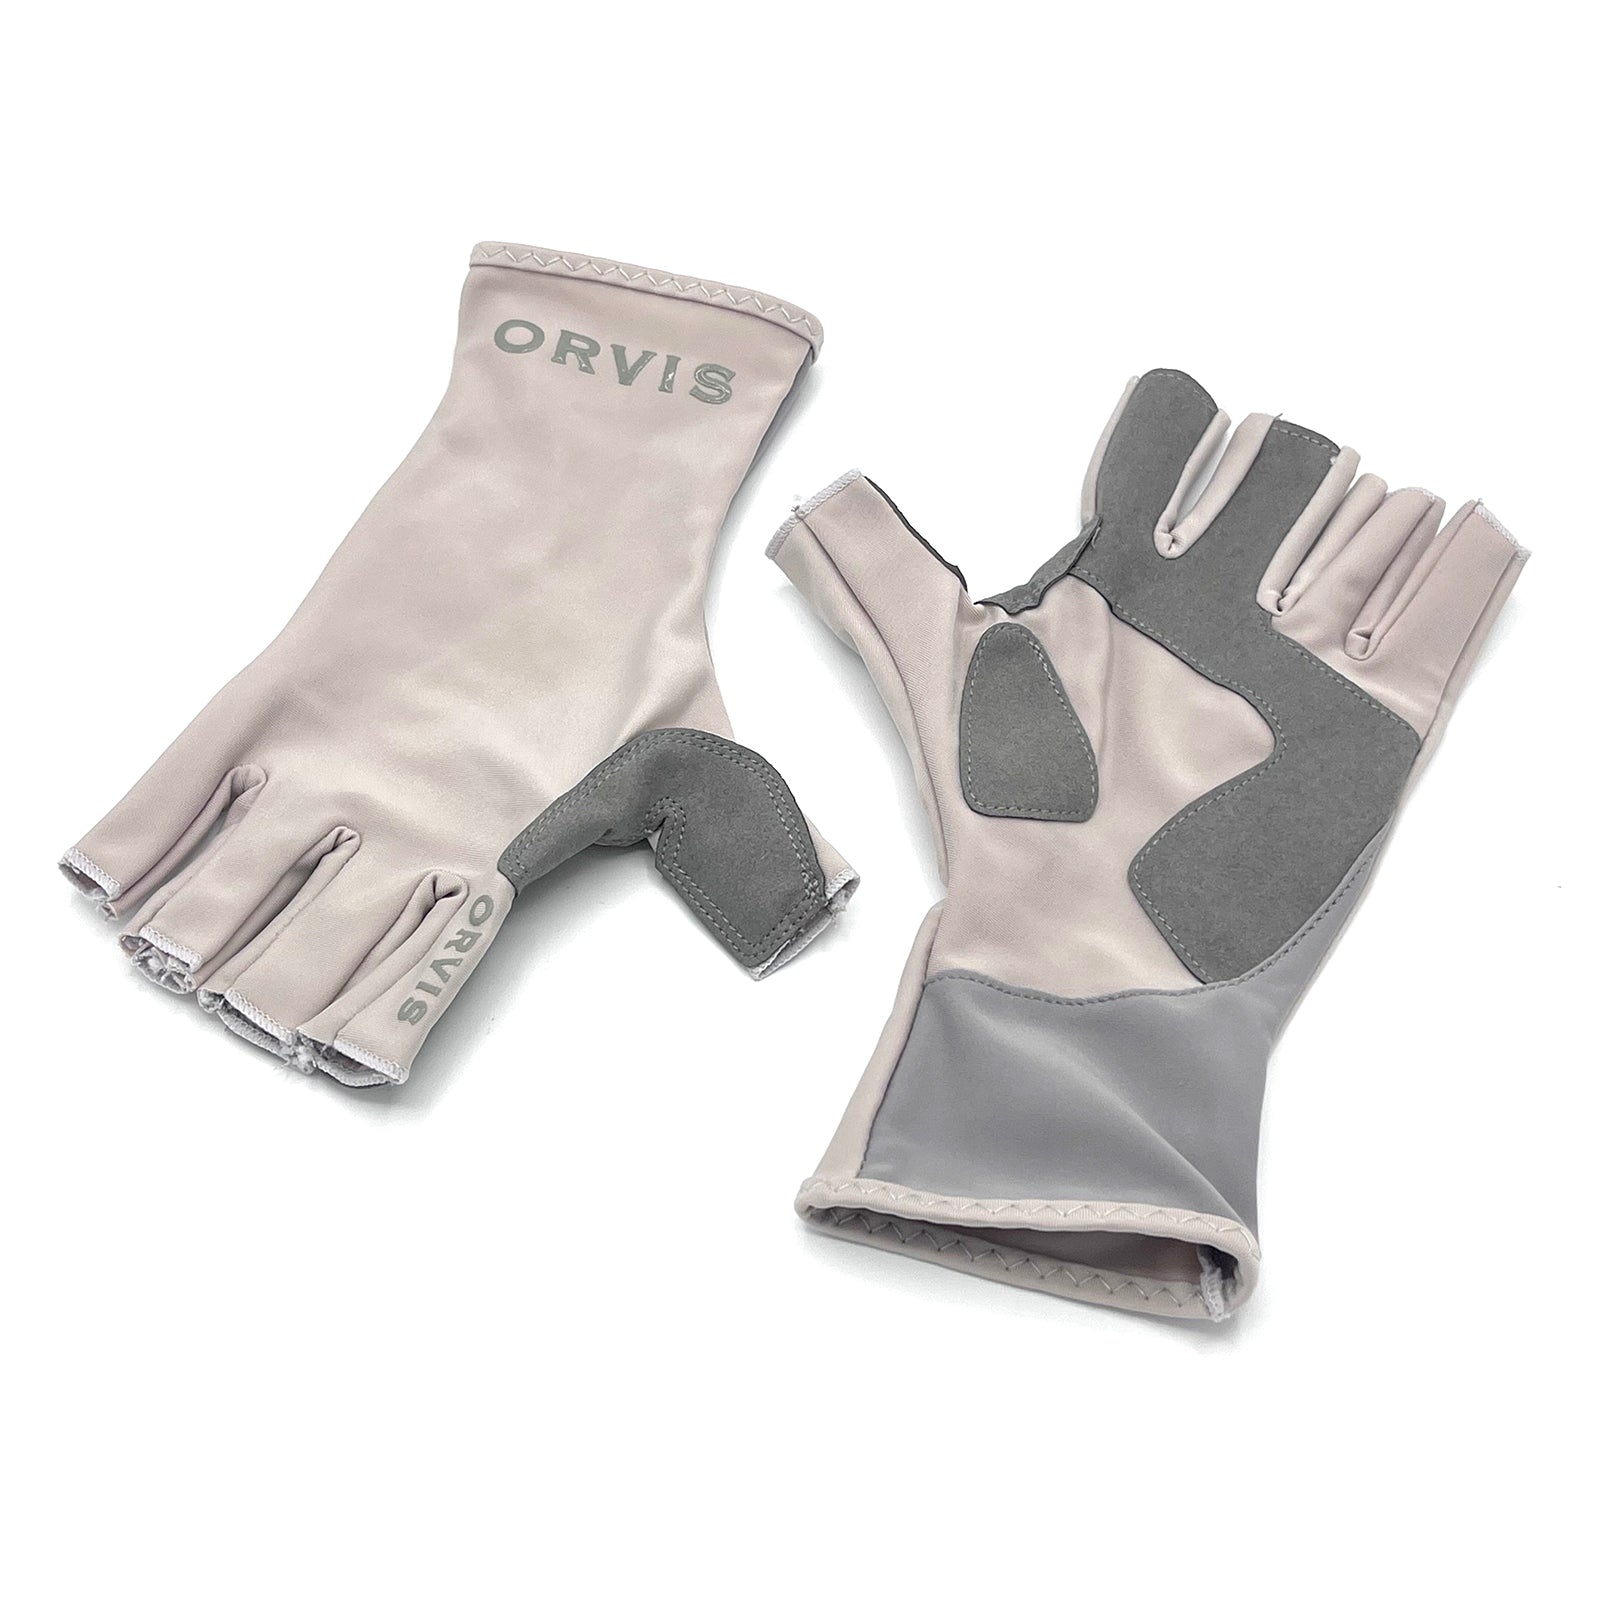 Orvis Sun Glove